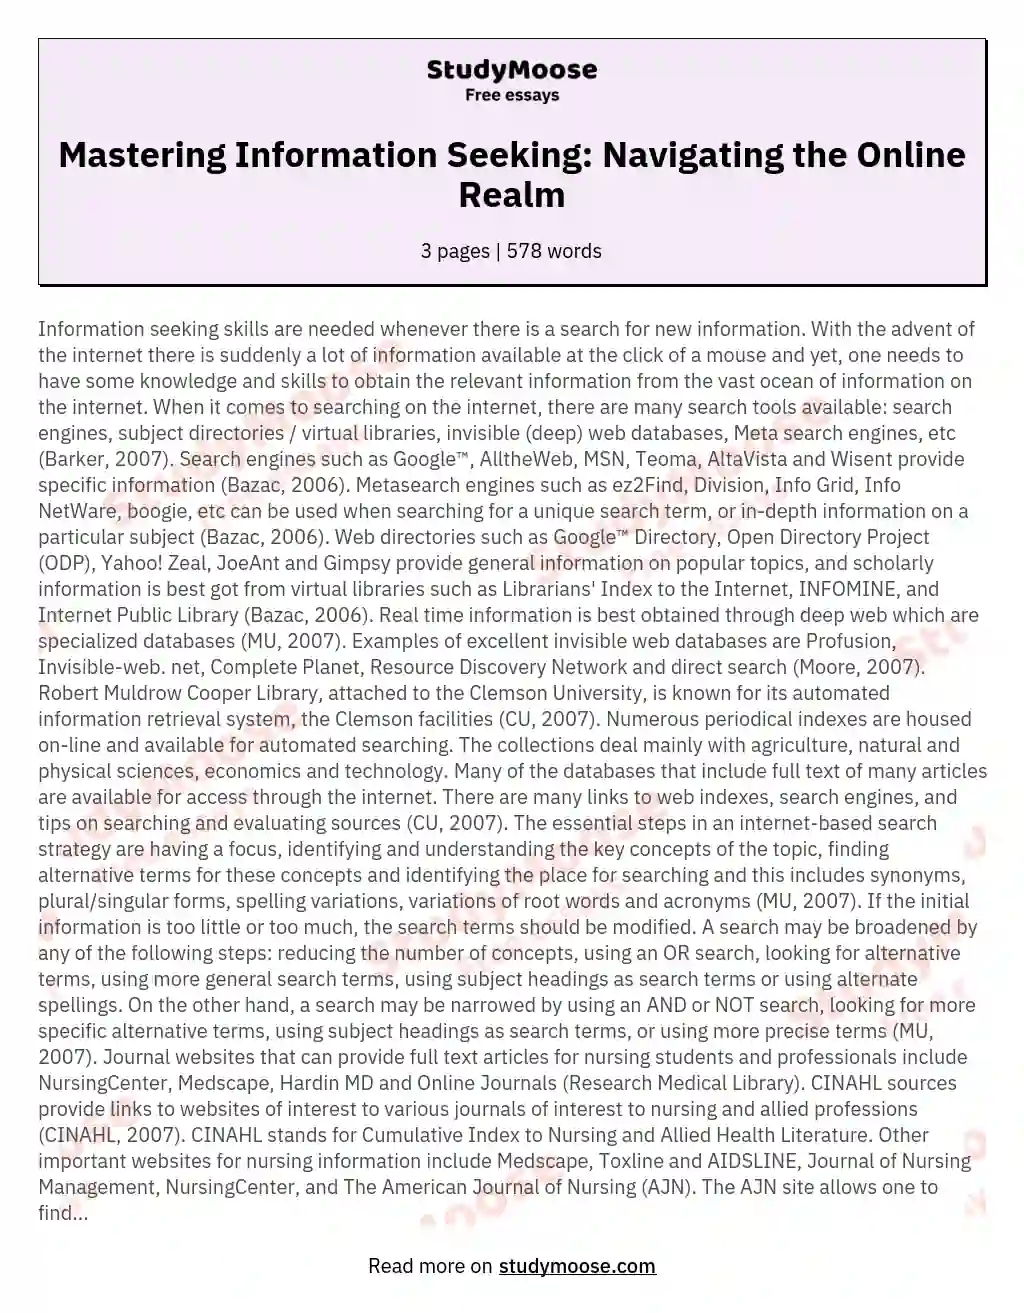 Mastering Information Seeking: Navigating the Online Realm essay